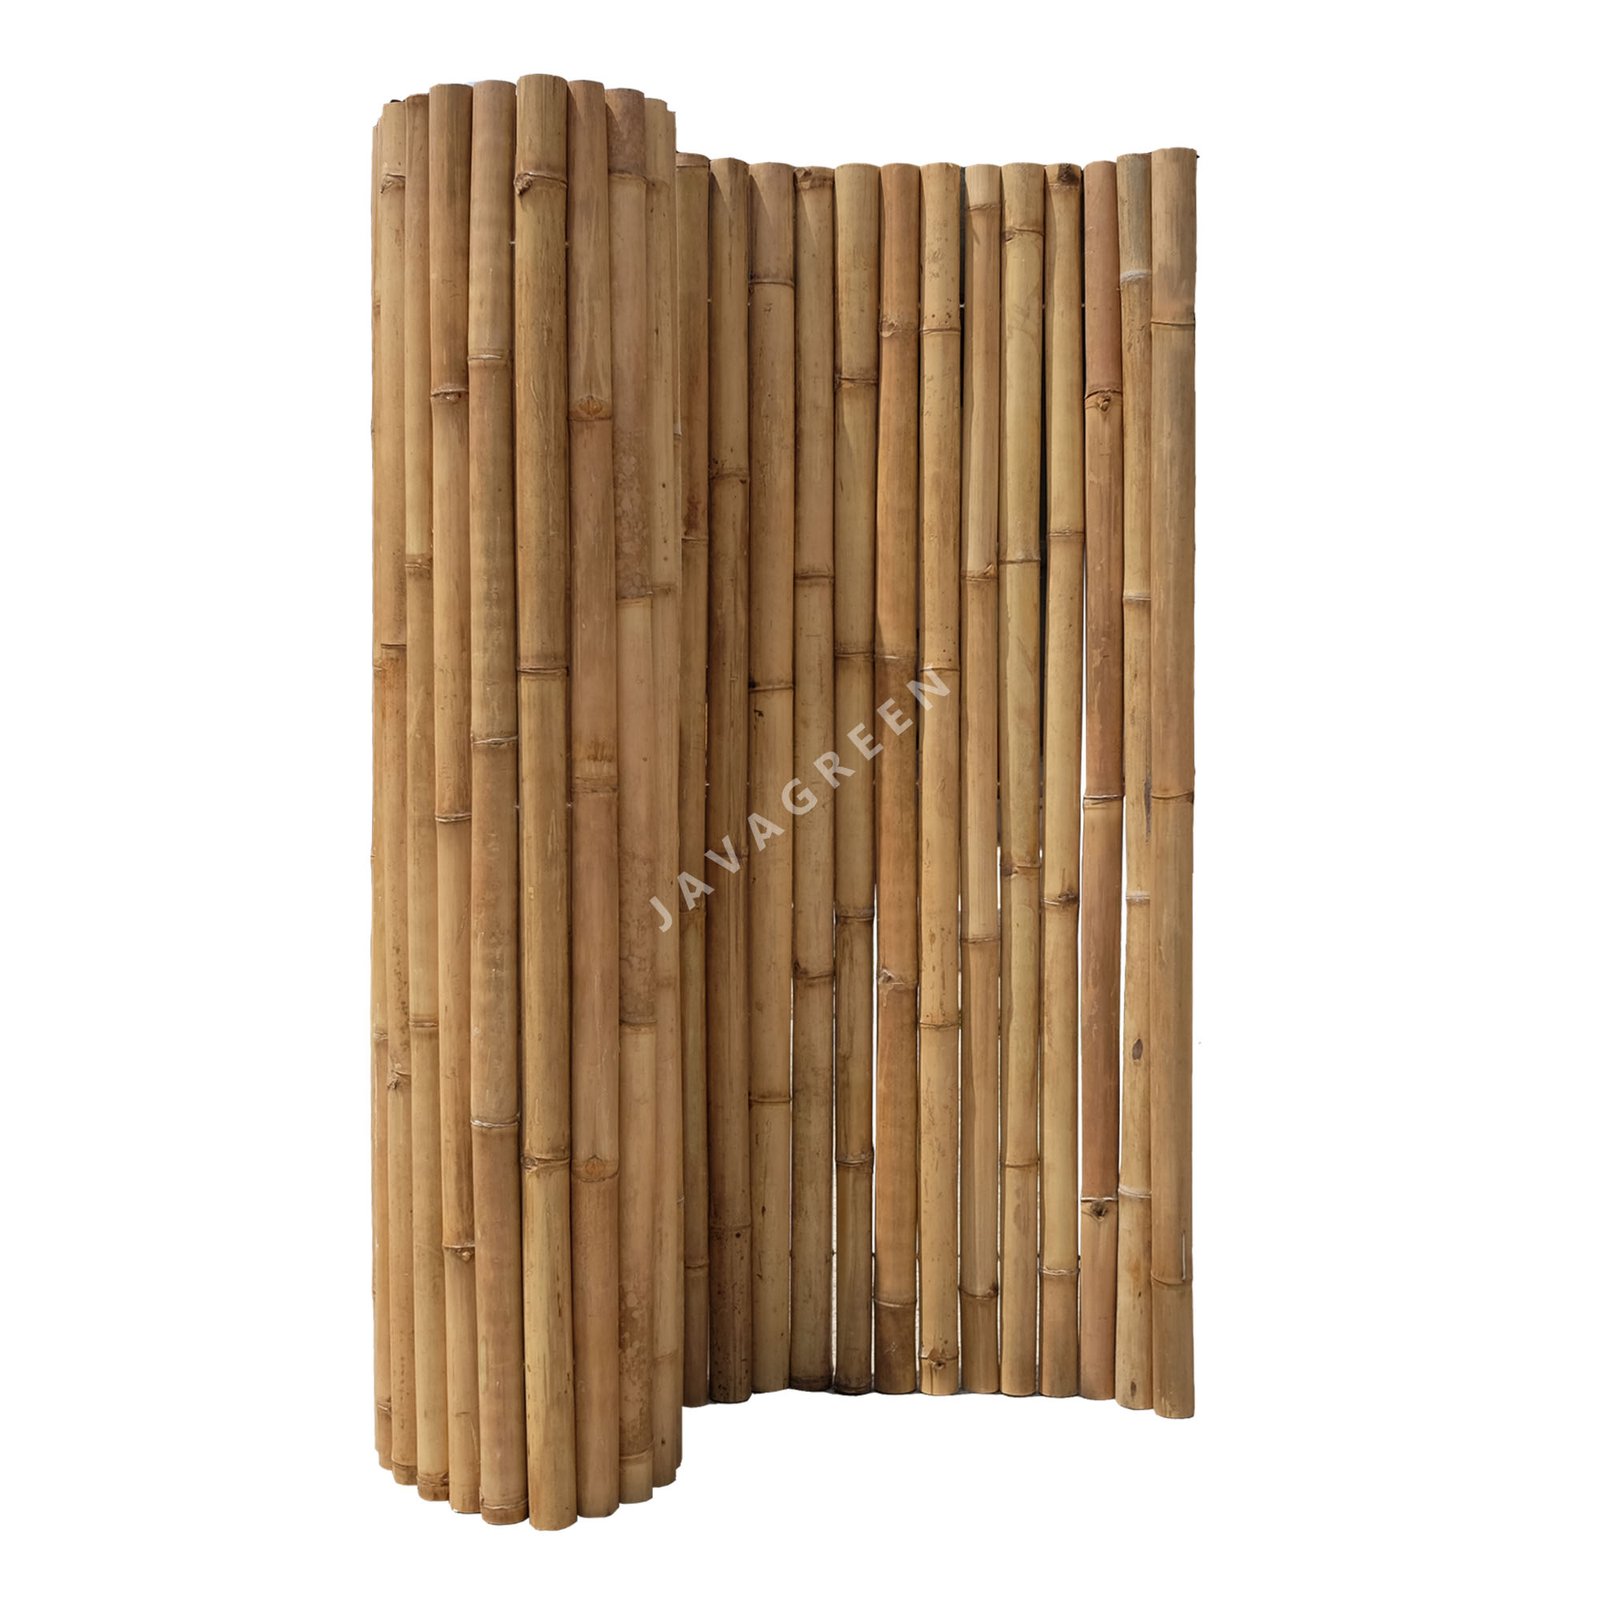 Bamboo mat / bamboo roll